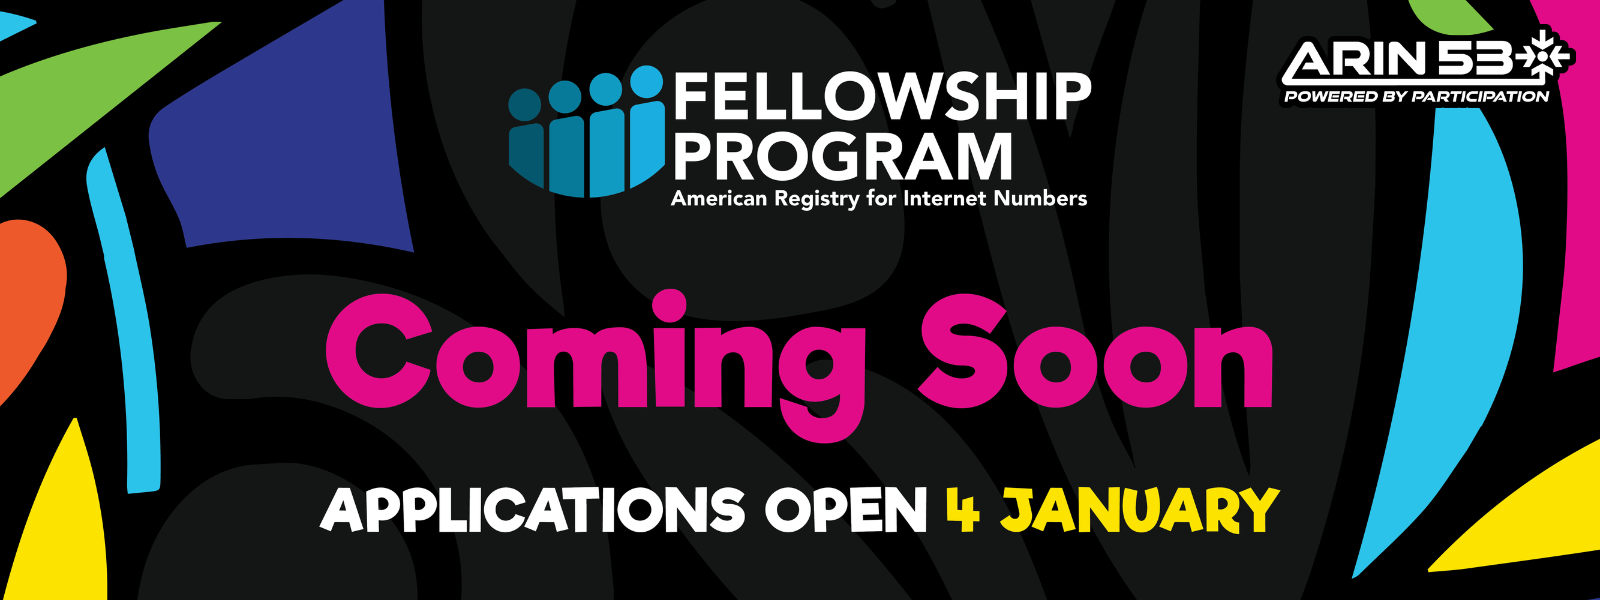 ARIN 53 Fellowship Program Coming Soon; Applications Open 4 January